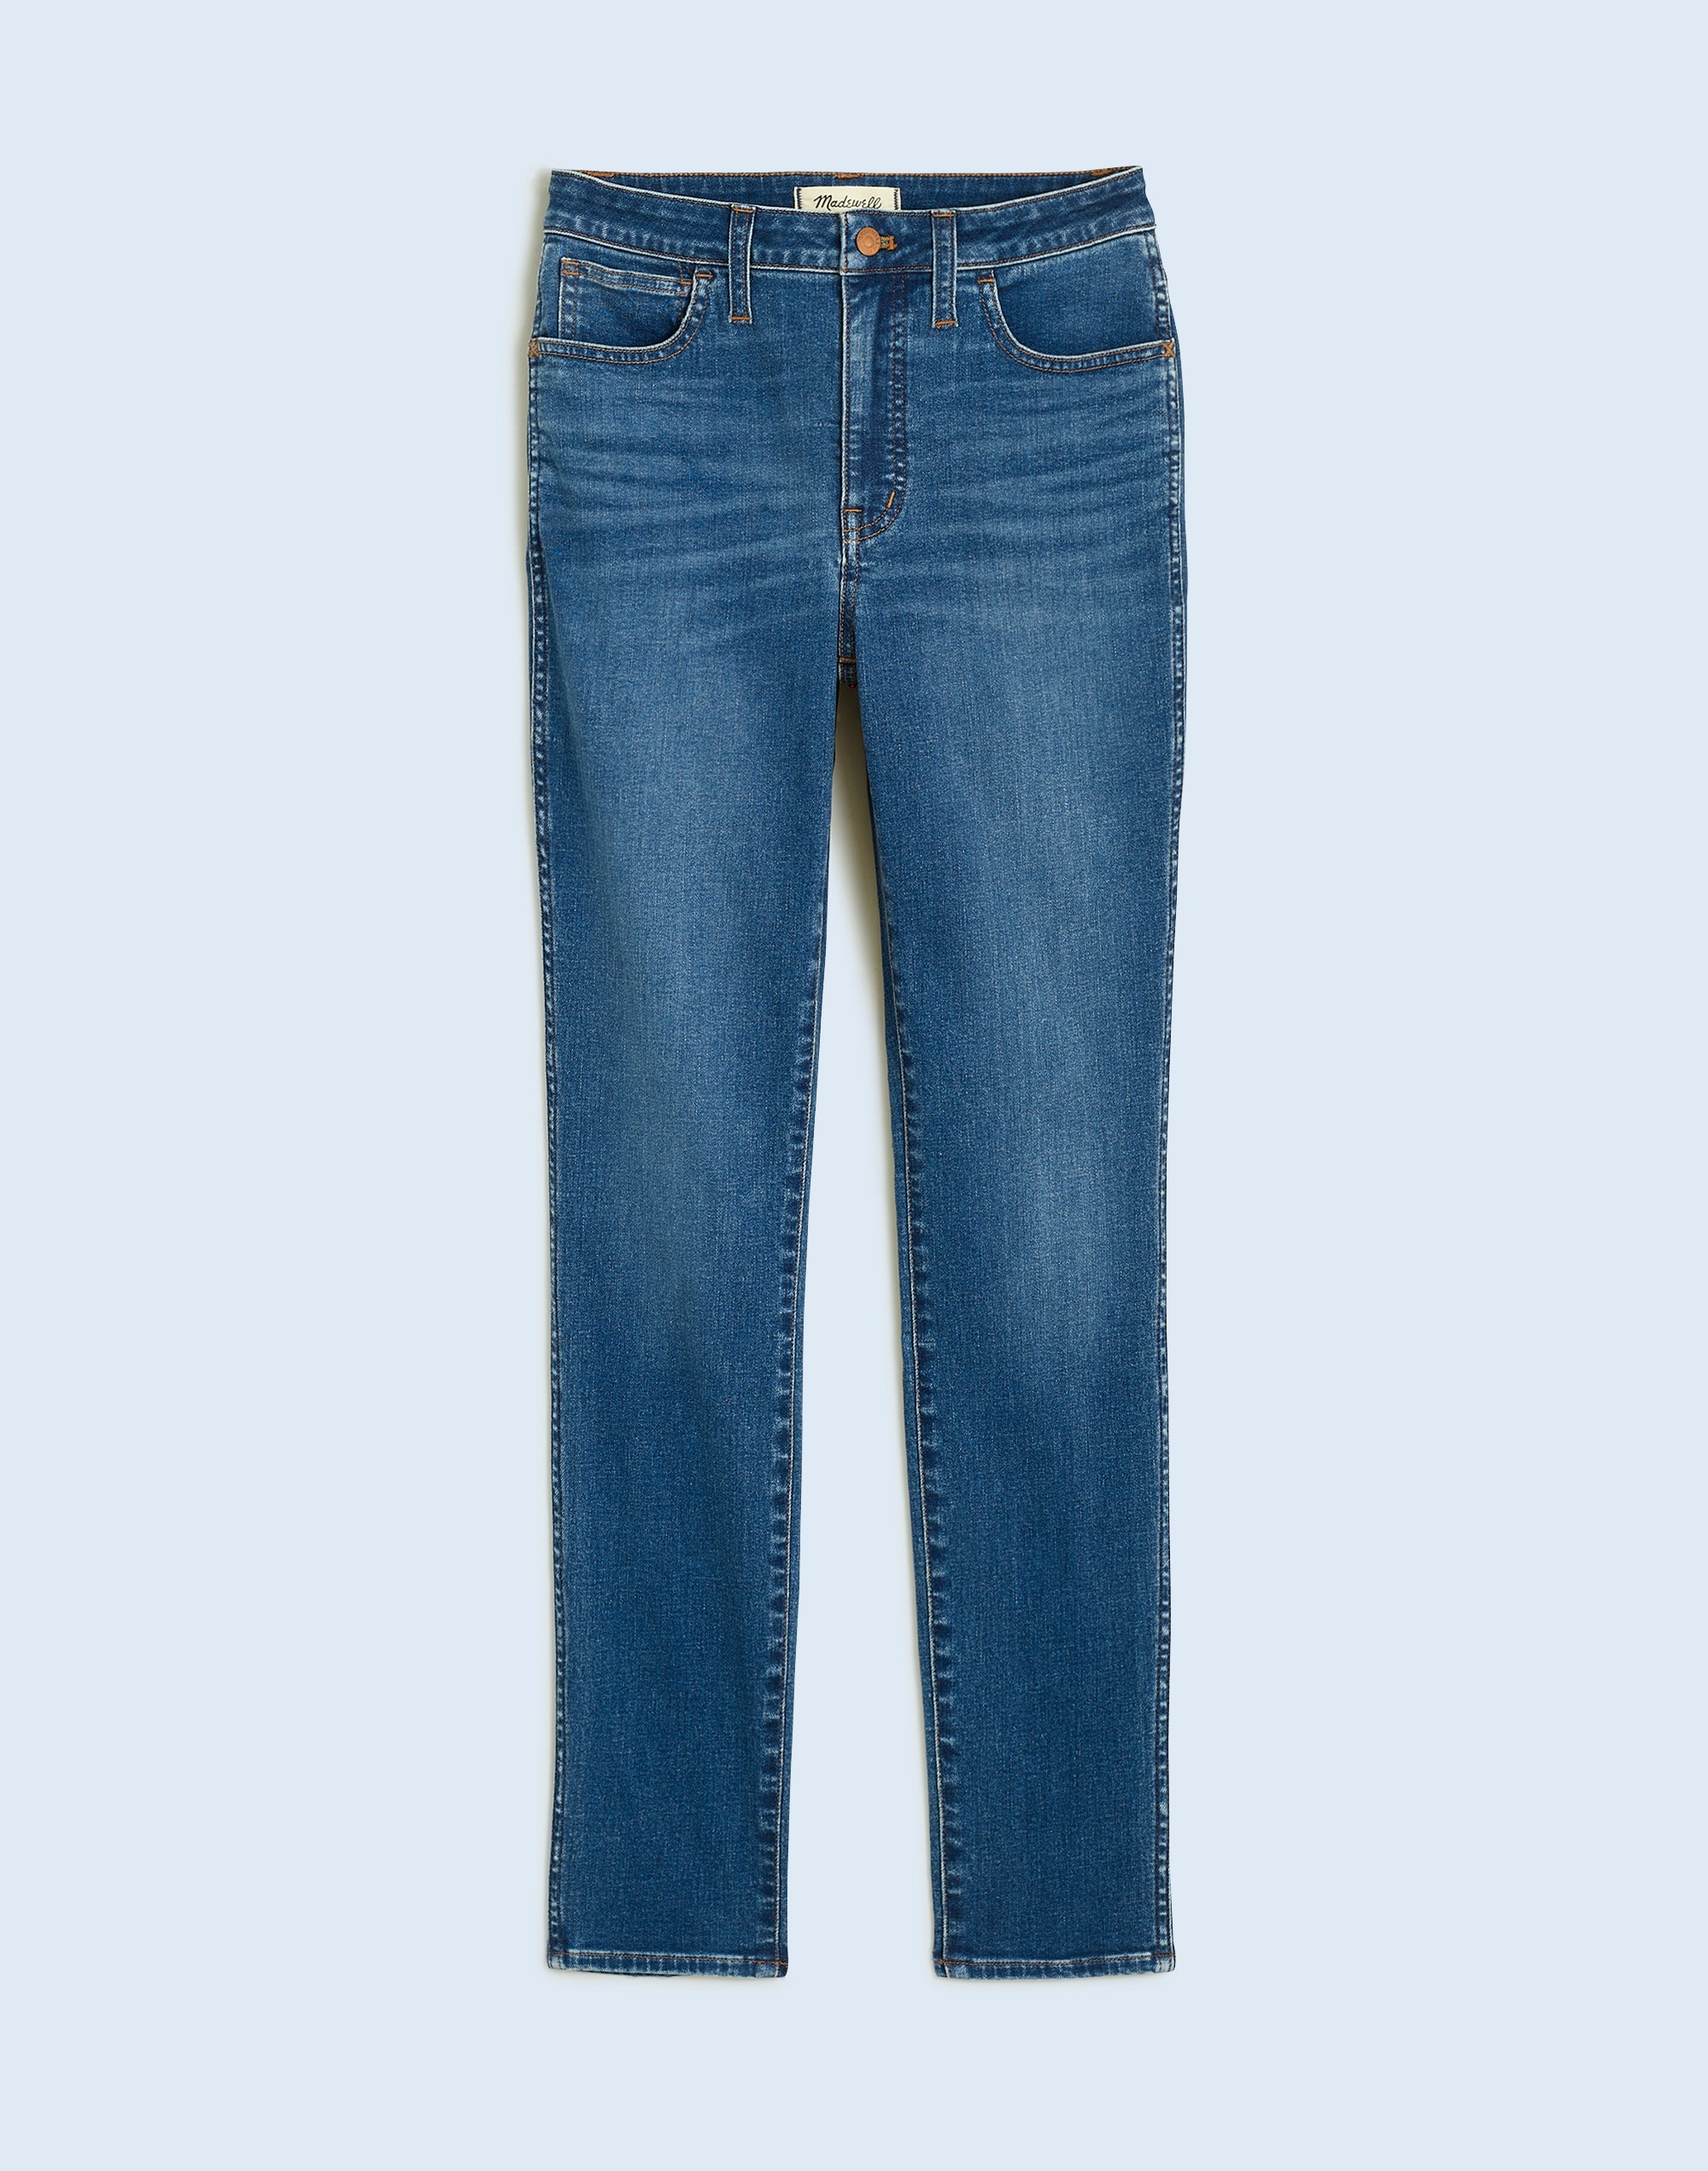 Plus Curvy 10" High-Rise Roadtripper Authentic Skinny Jeans Faulkner Wash